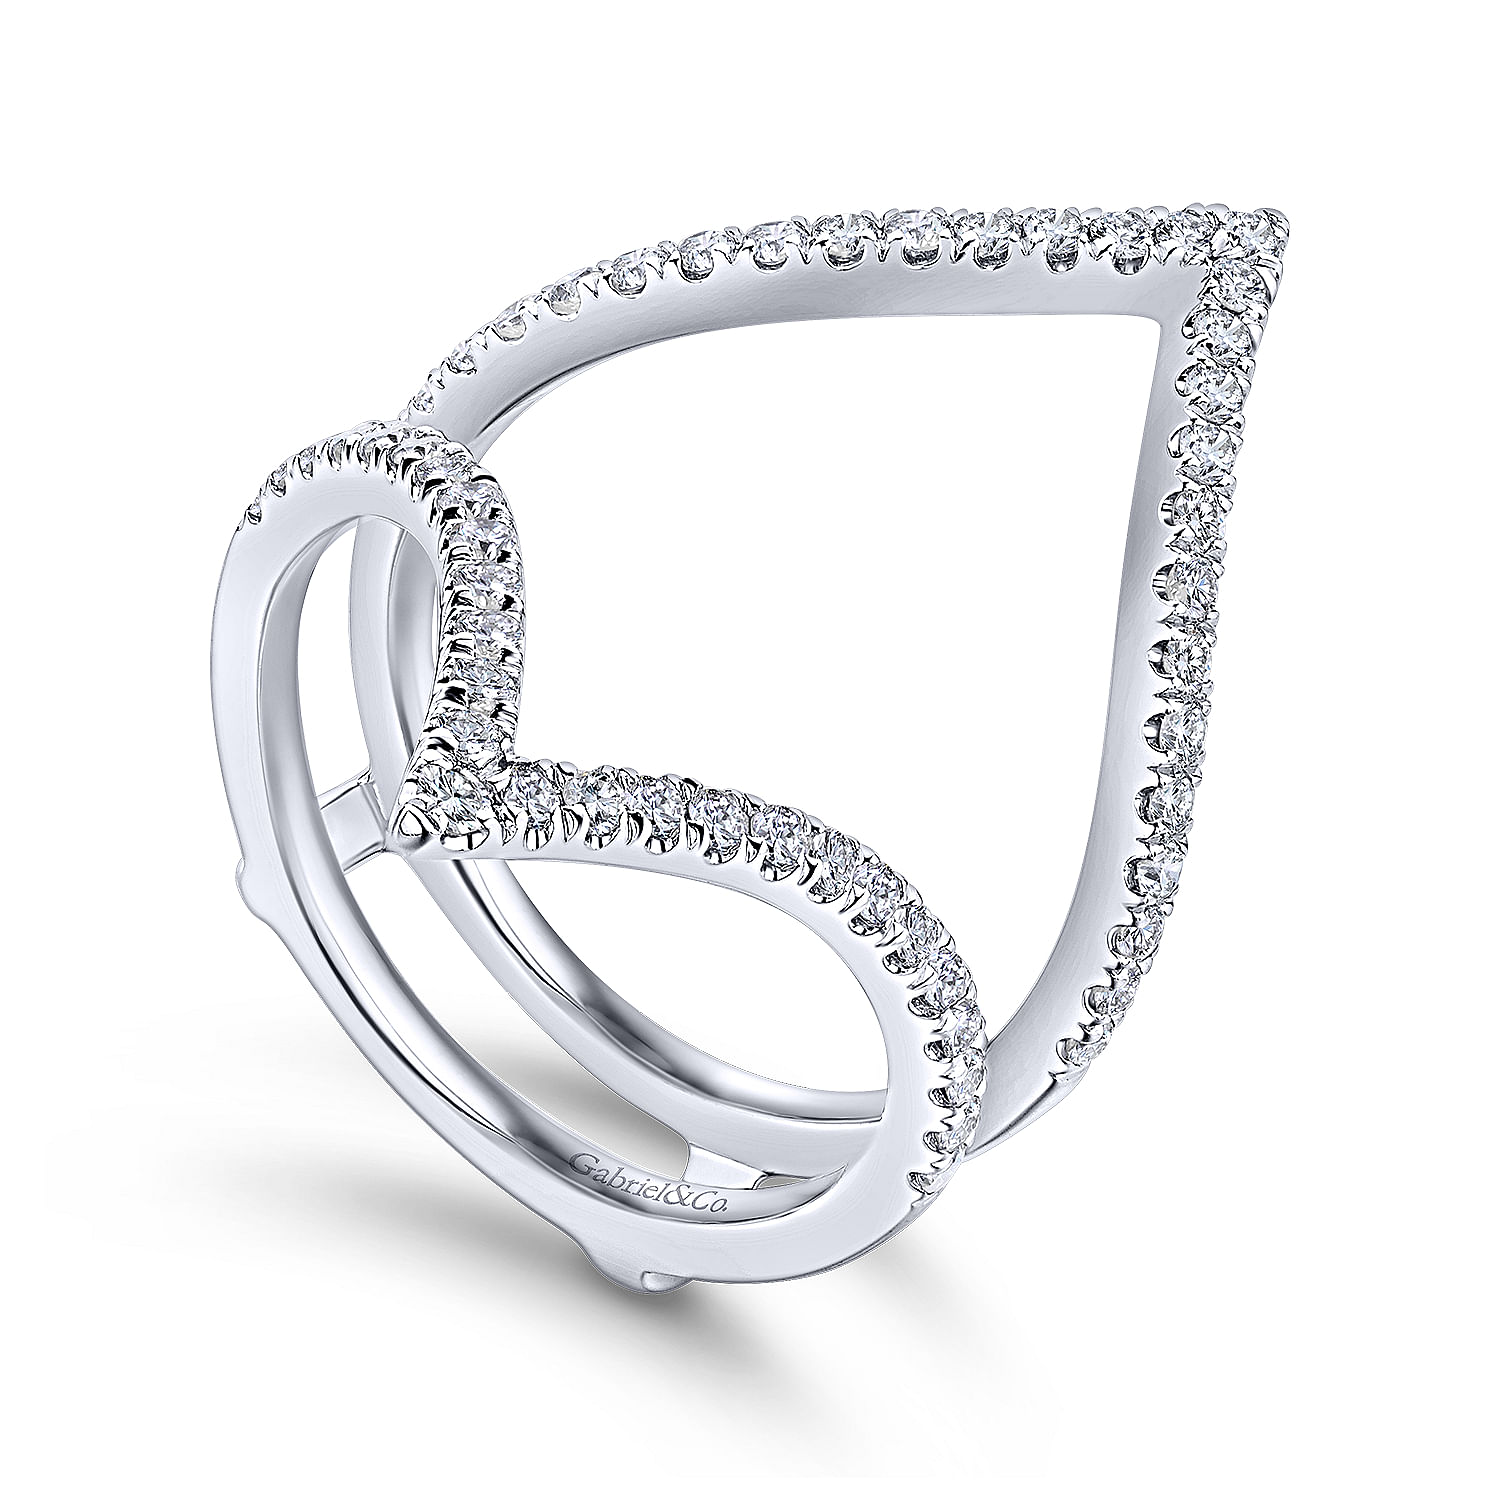 Triangular 14K White Gold French Pavé Set Diamond Ring Enhancer